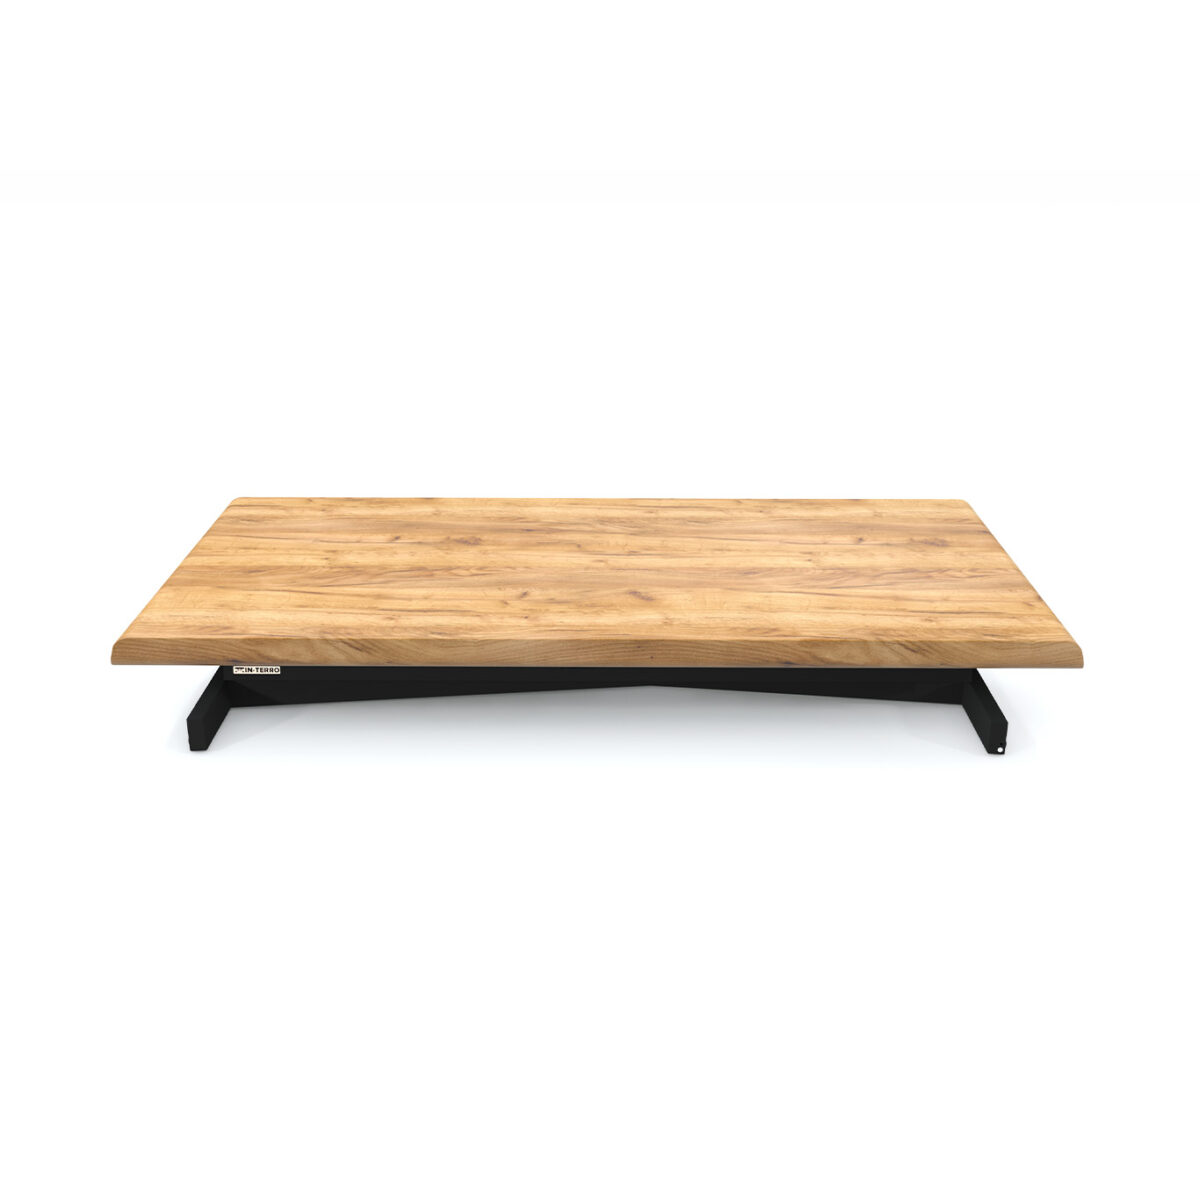 XTT Wood стол трансформер 3